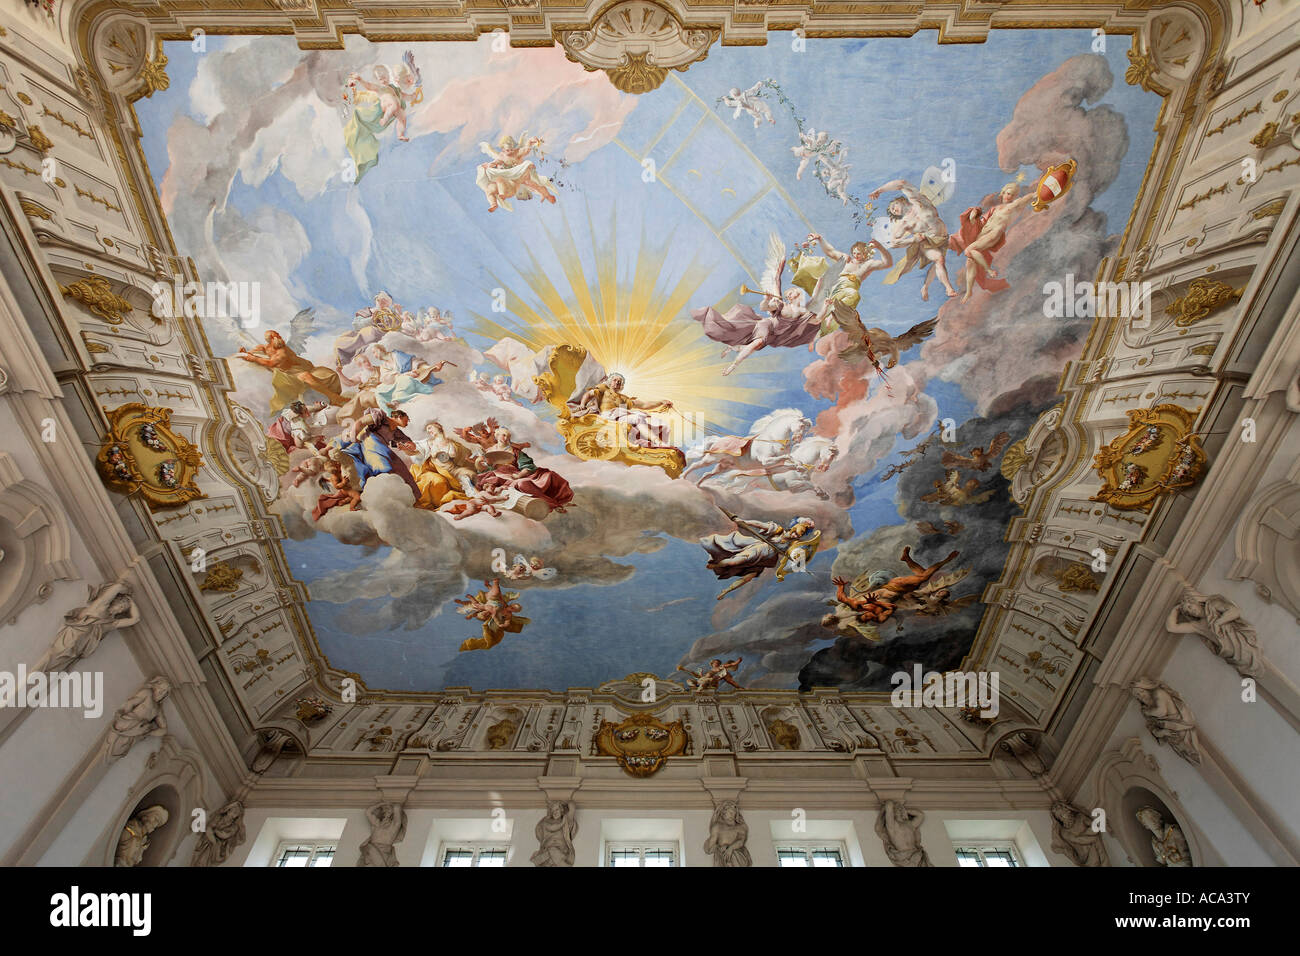 Religious foundation Goettweig, Kaiserstiege, famous ceiling fresco by Paul Troger, Lower Austria, Austria Stock Photo